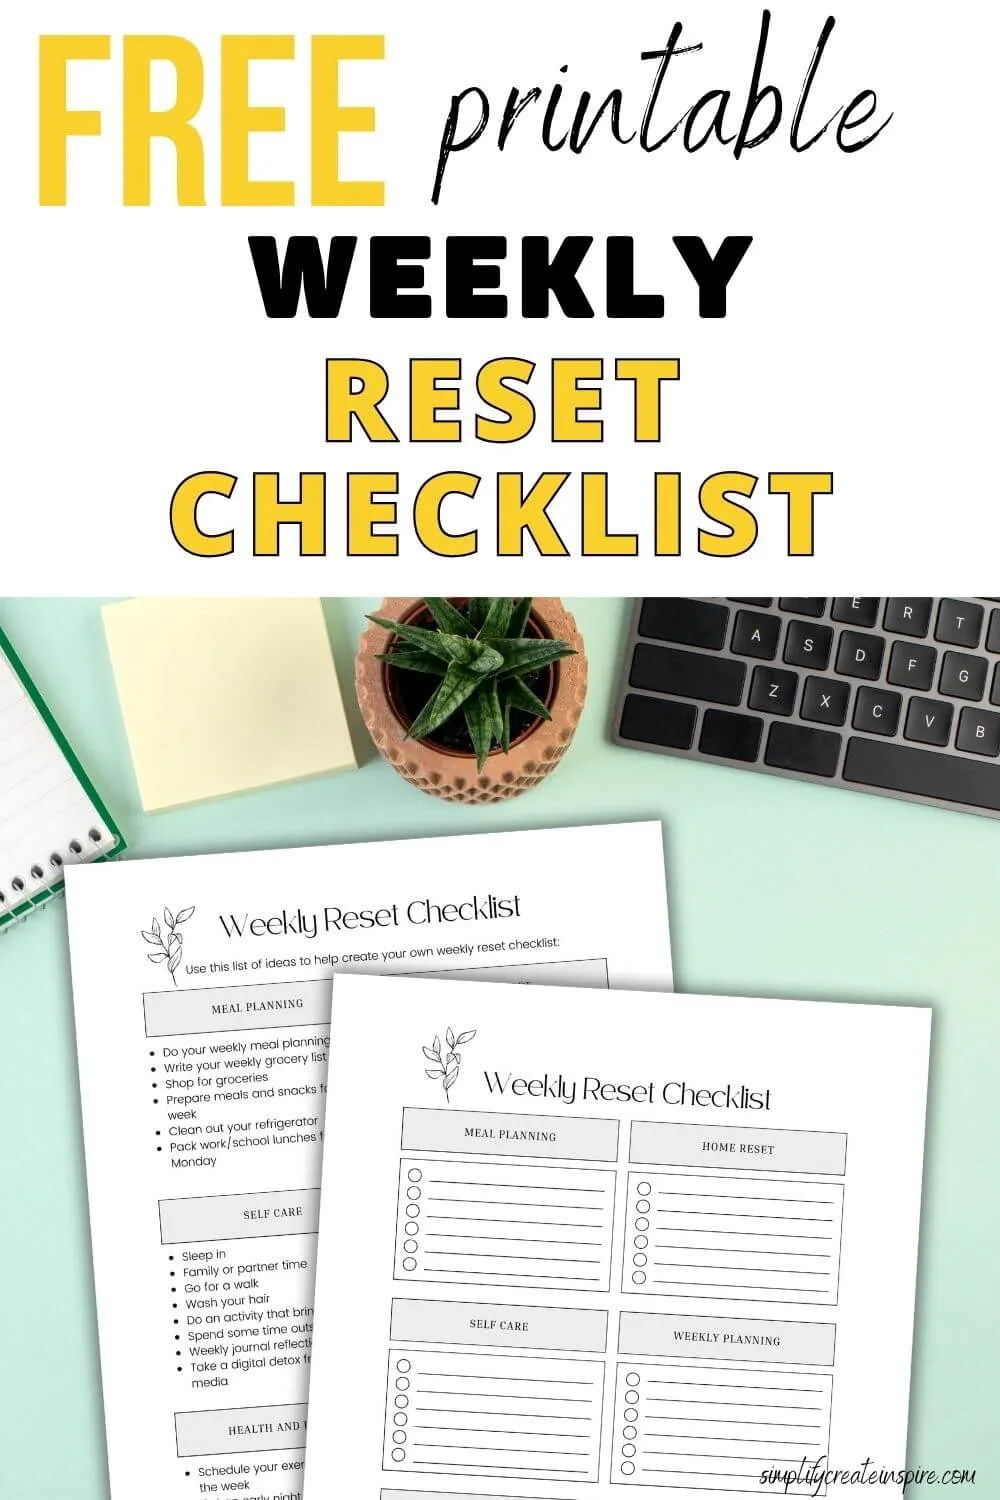 Pinterest image free printable sunday reset checklist.